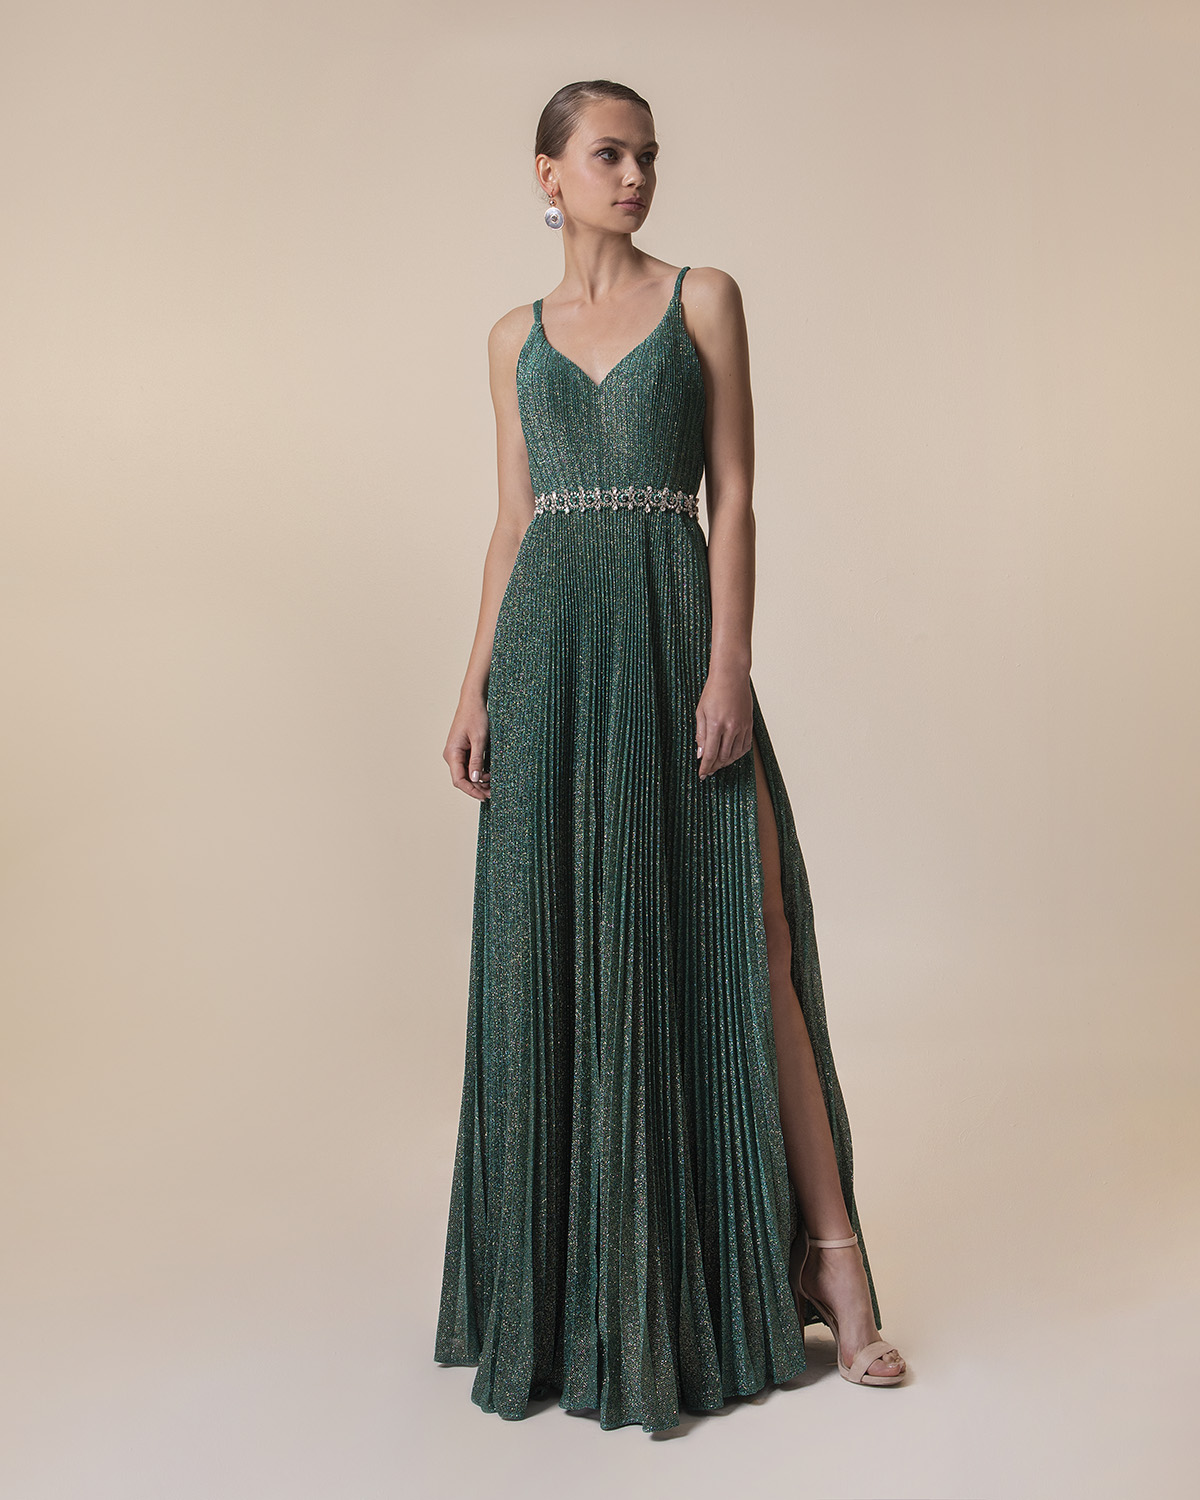 Вечерние платья / Long pleated evening dress with shining fabric and beading around the waist